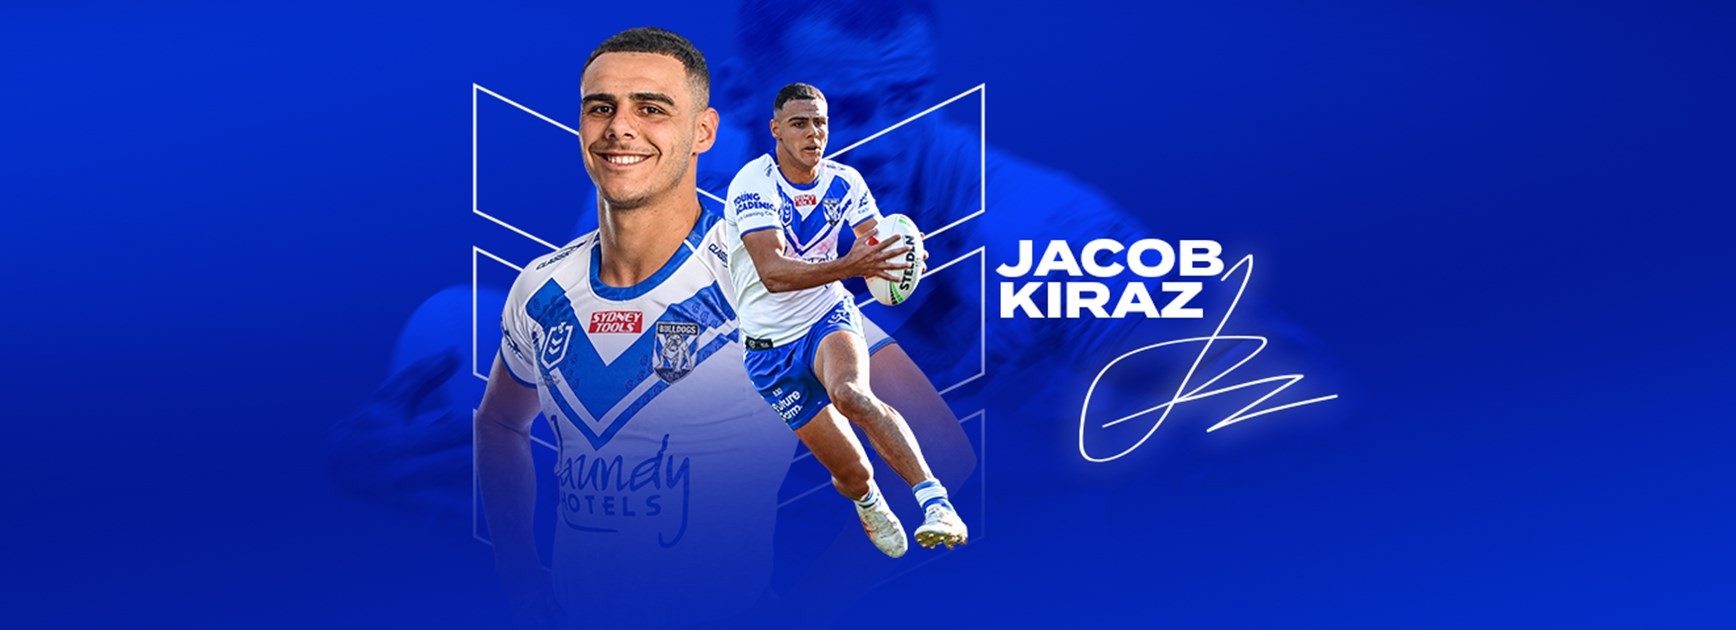 Jacob Kiraz Commits to the Bulldogs Through 2027